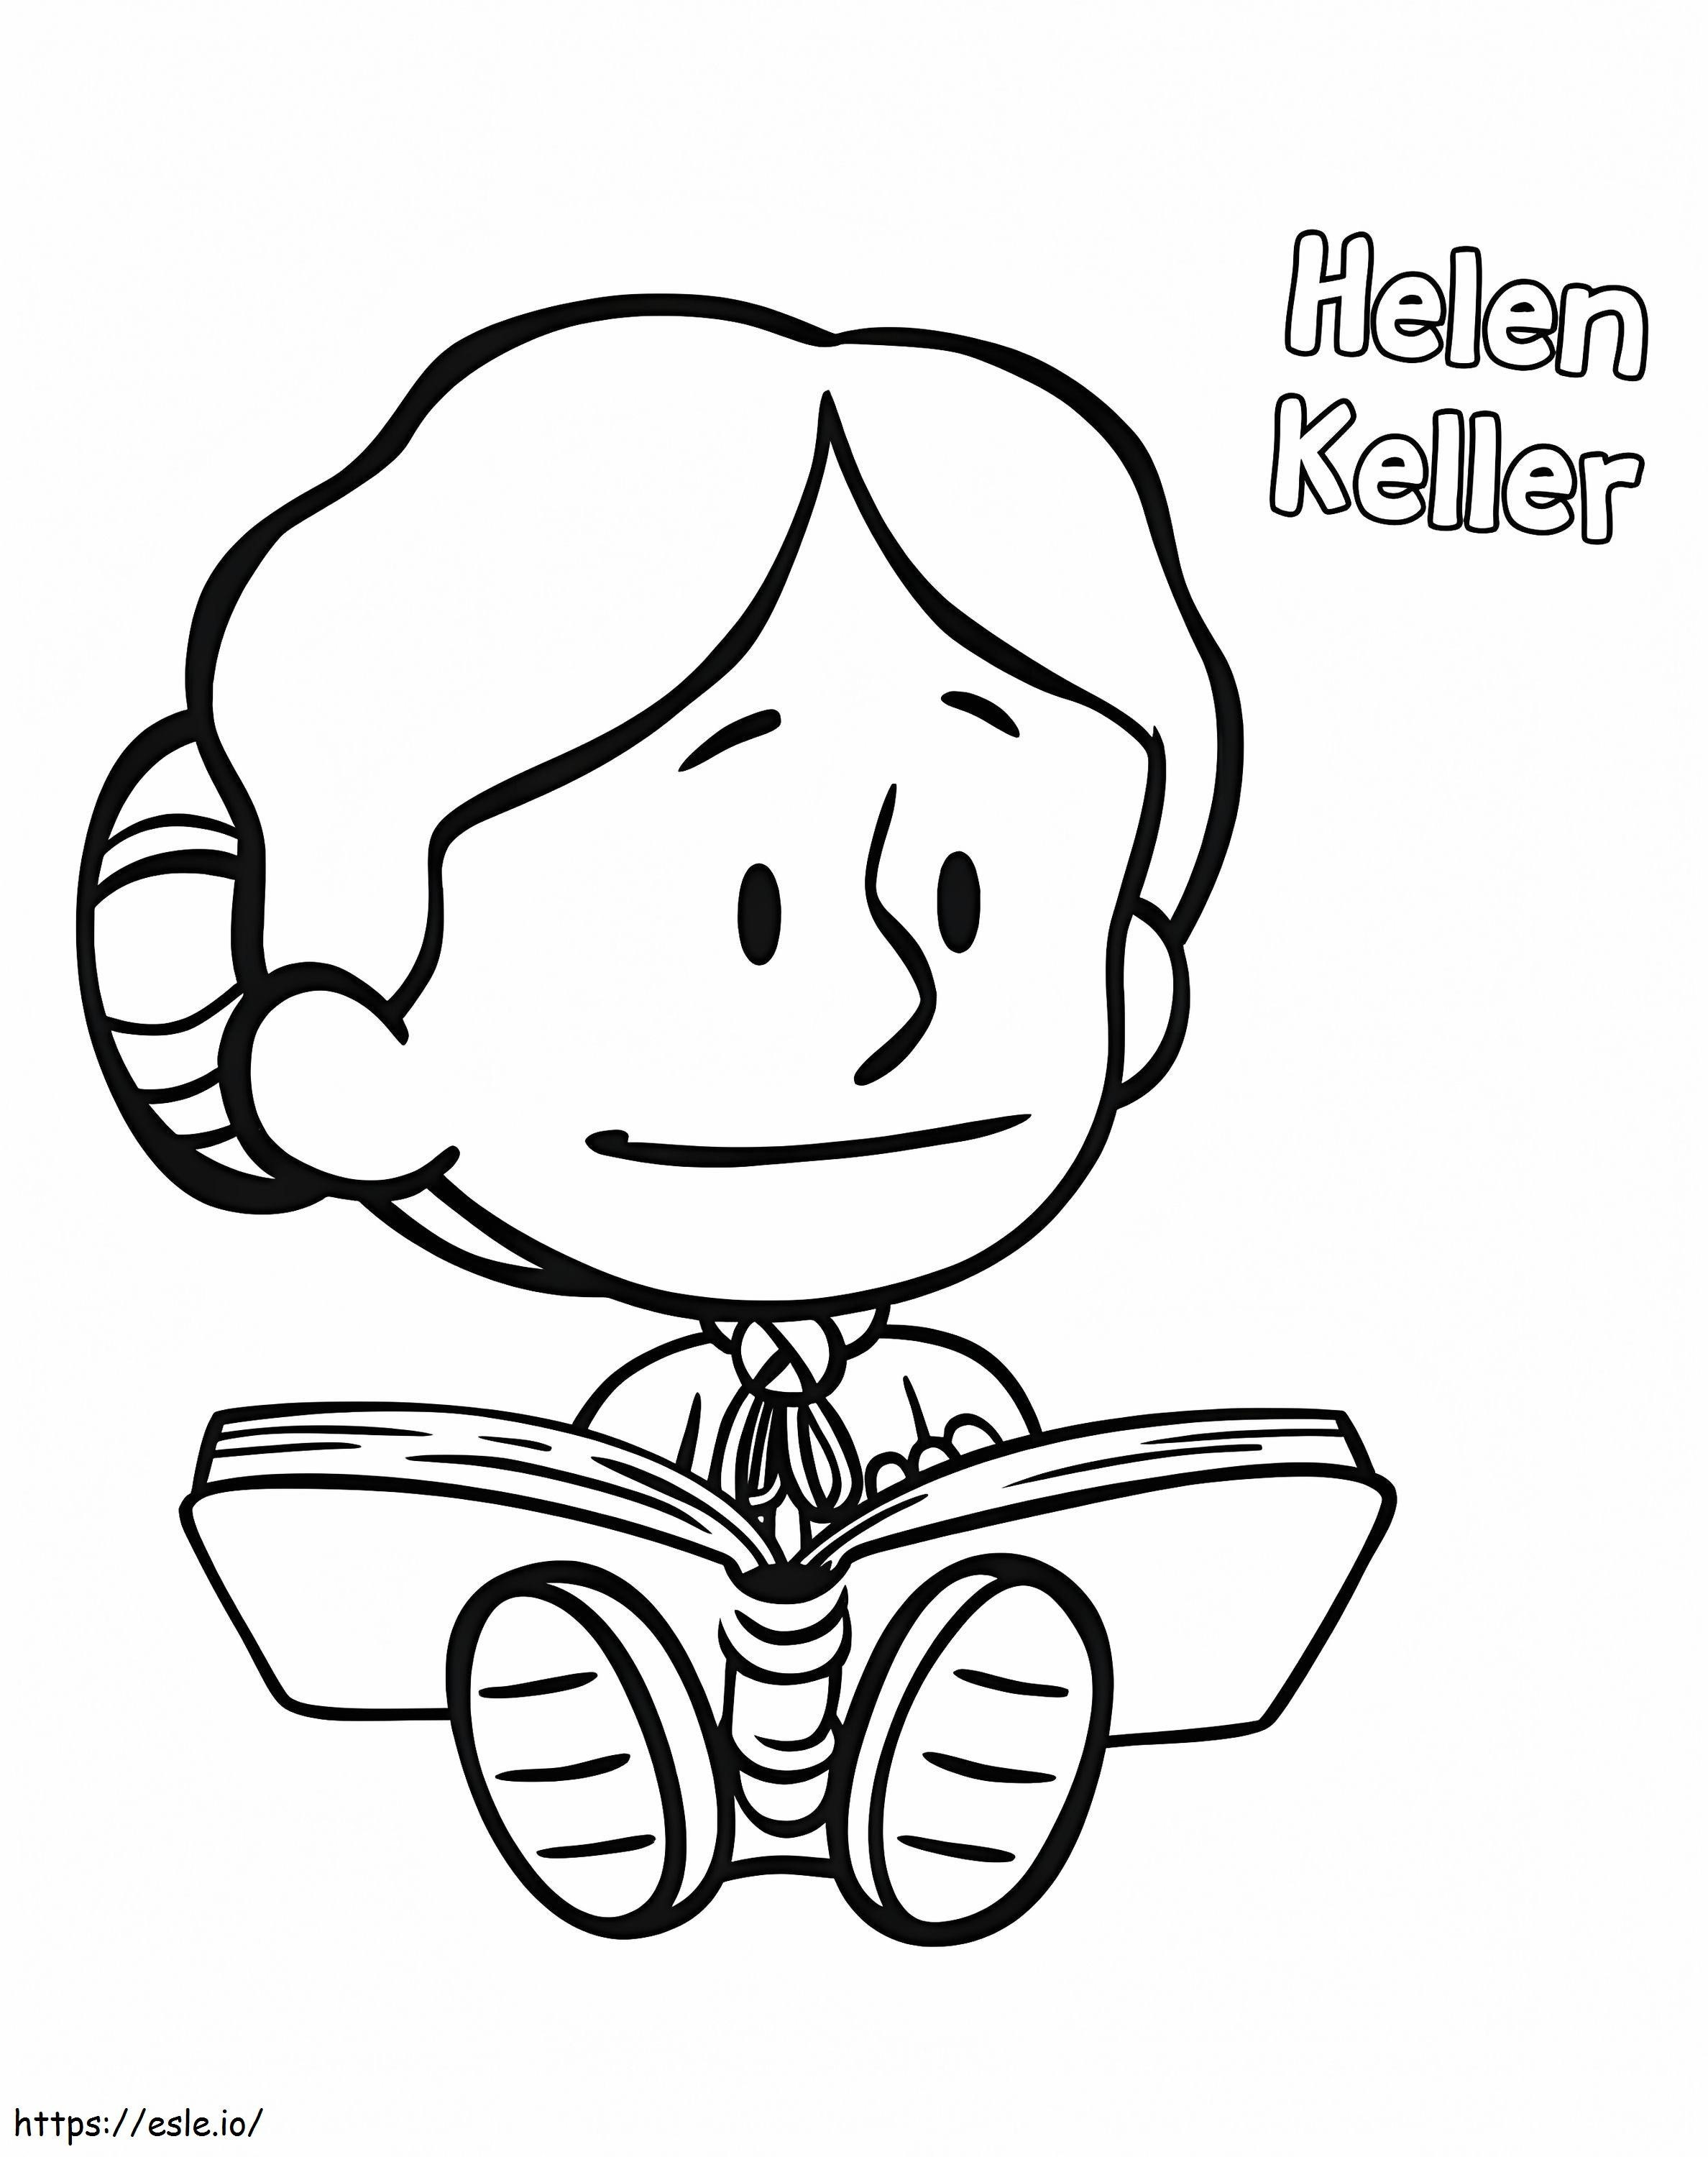 Chibi Helen Keller kleurplaat kleurplaat